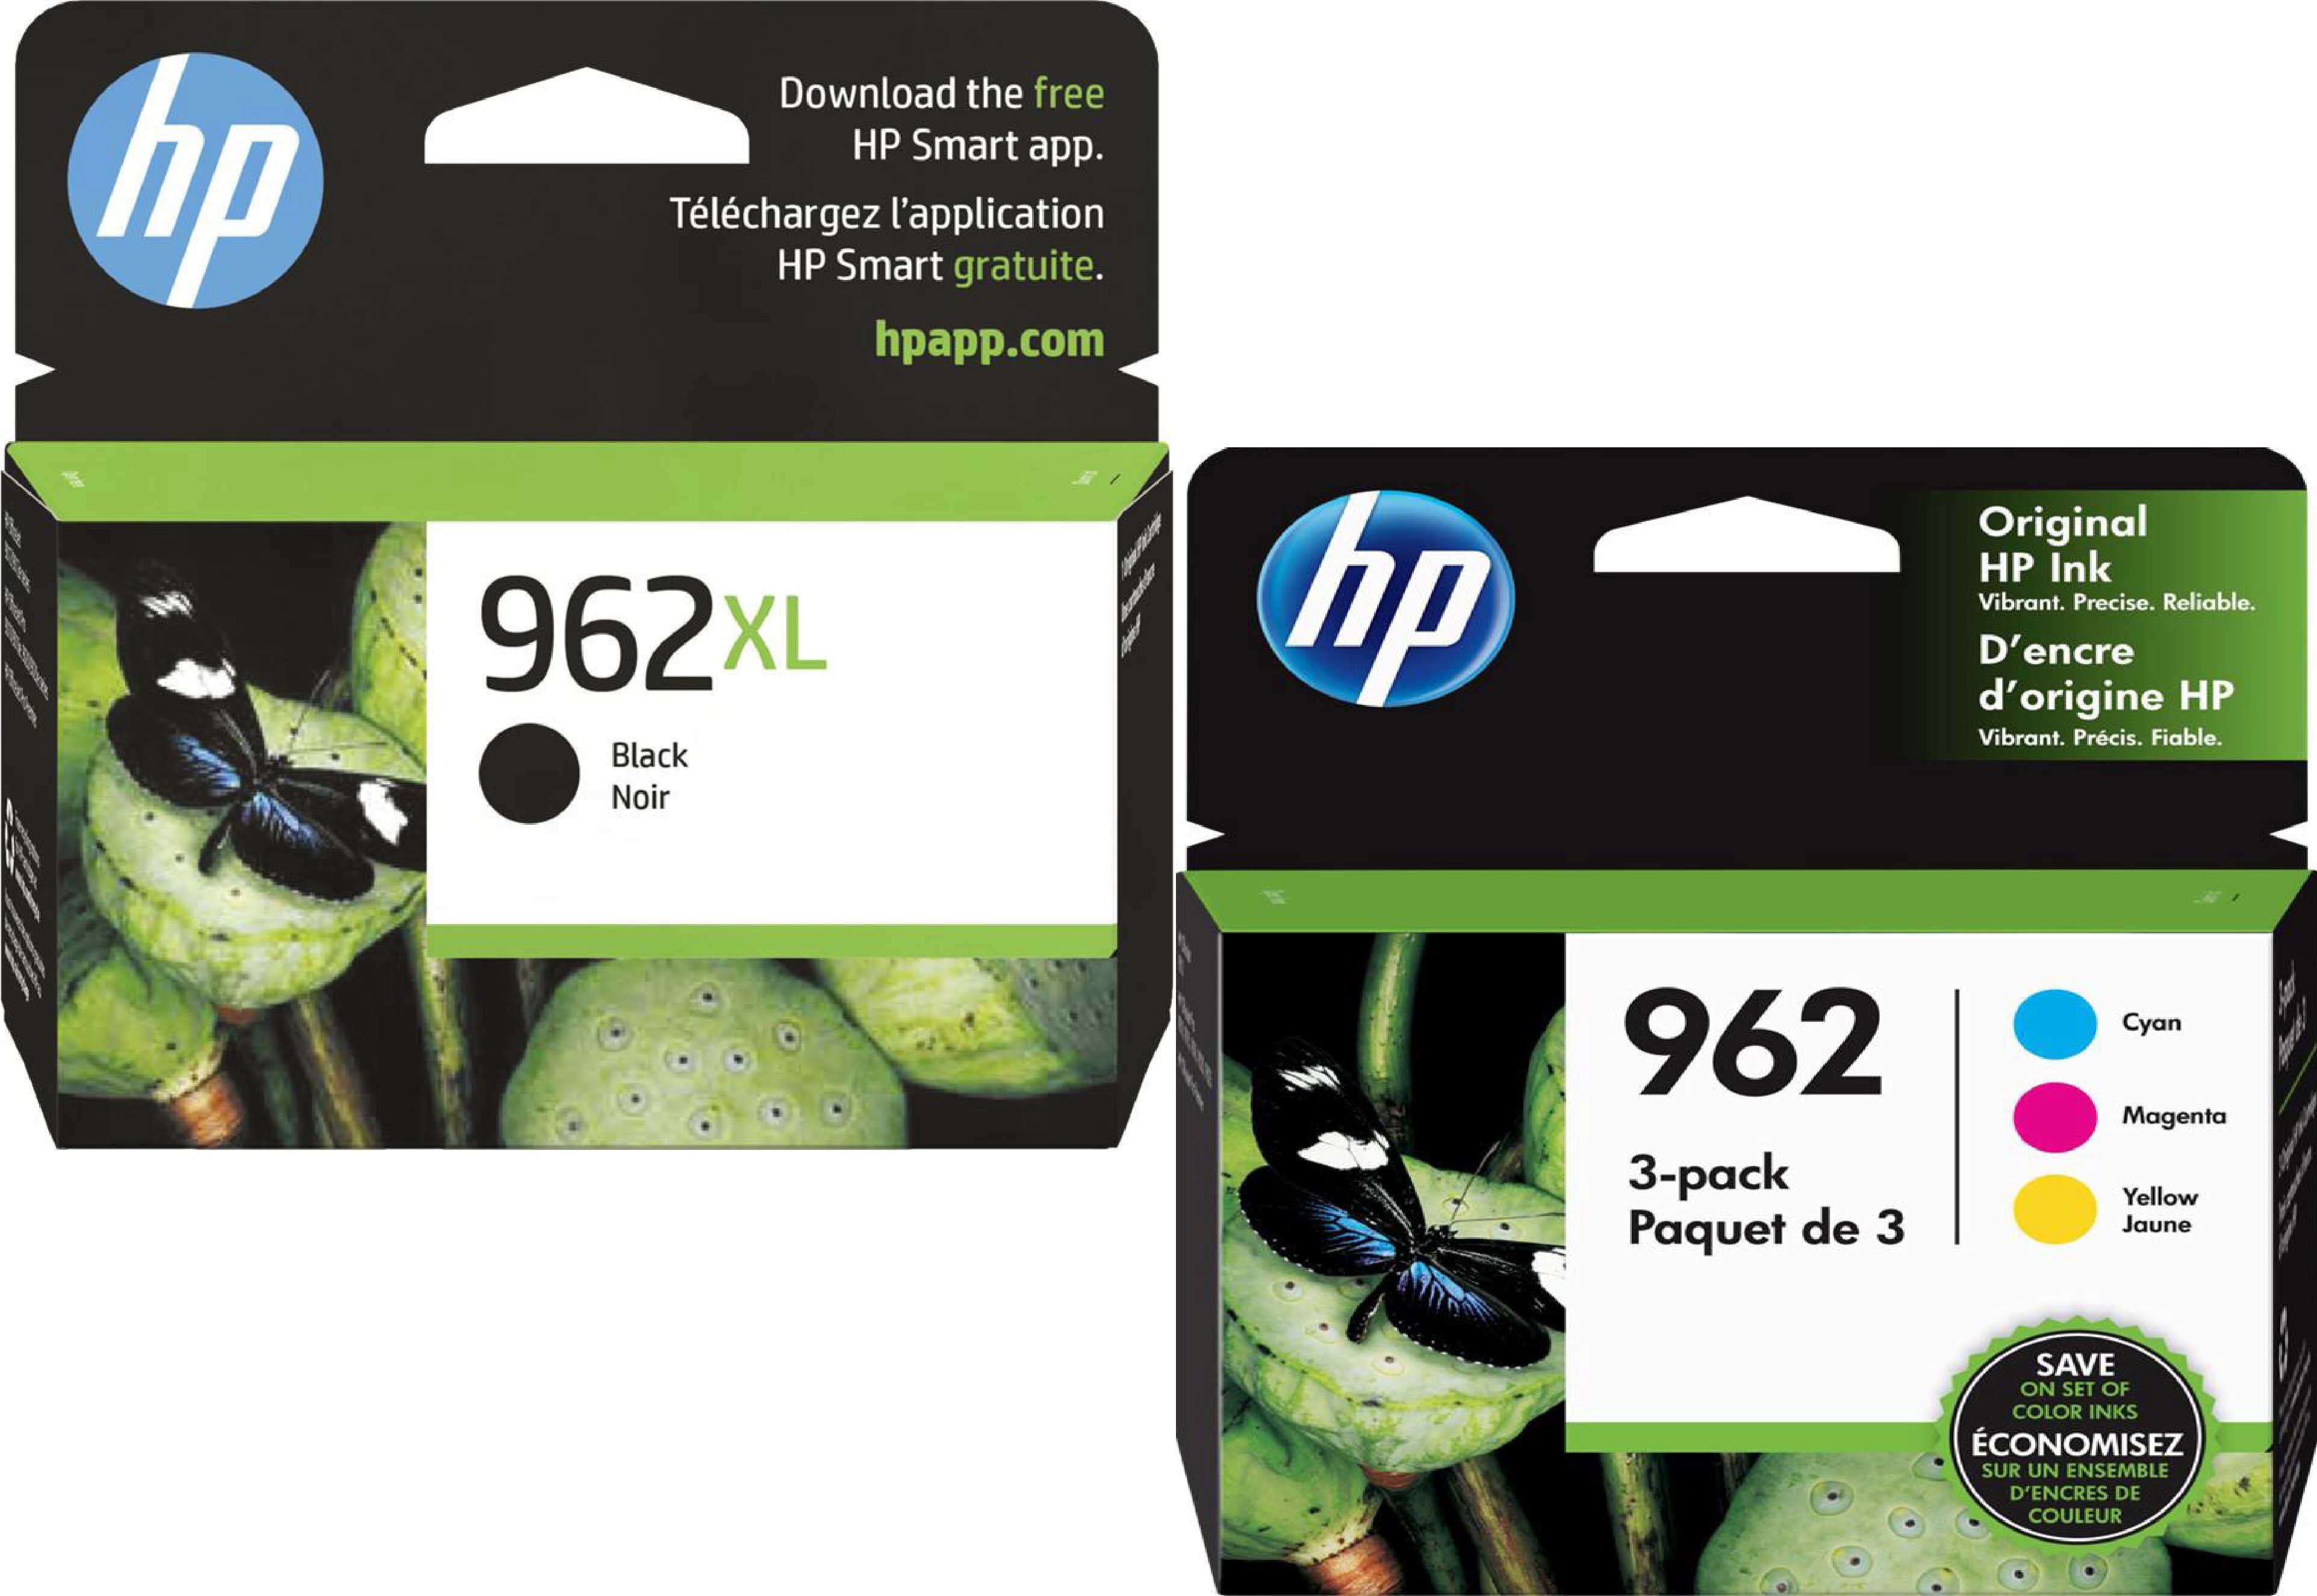 HP 963 Black Cyan Magenta Yellow Ink Cartridge Bundle Pack